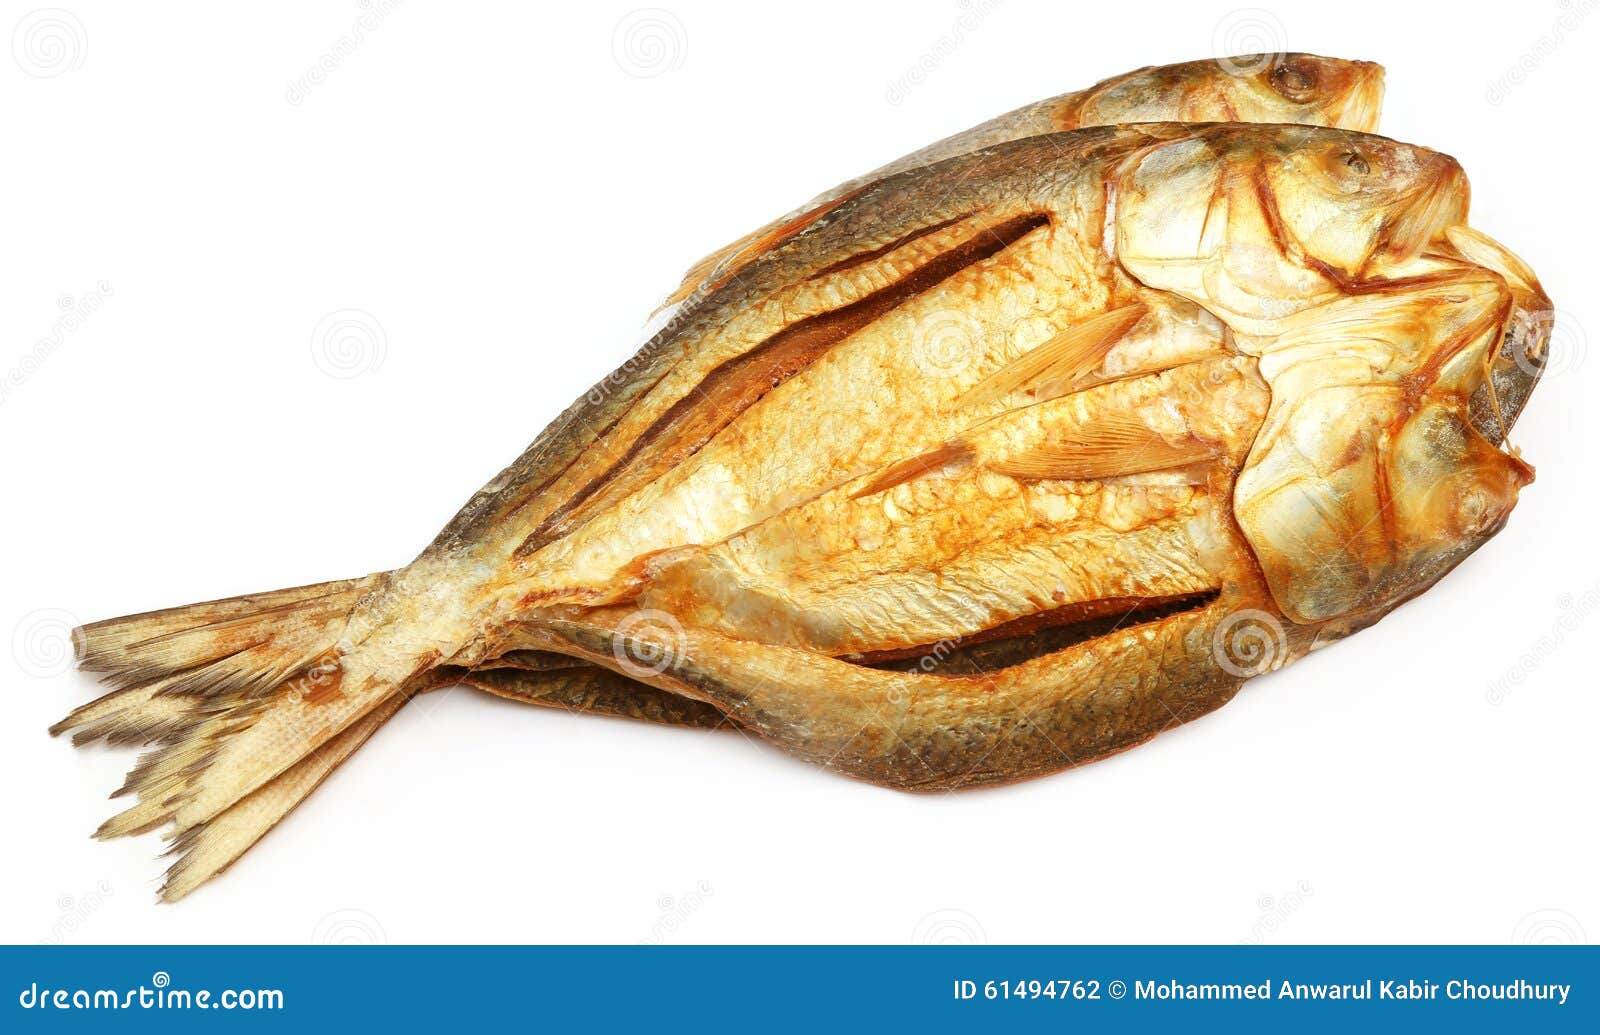 clipart dried fish - photo #3